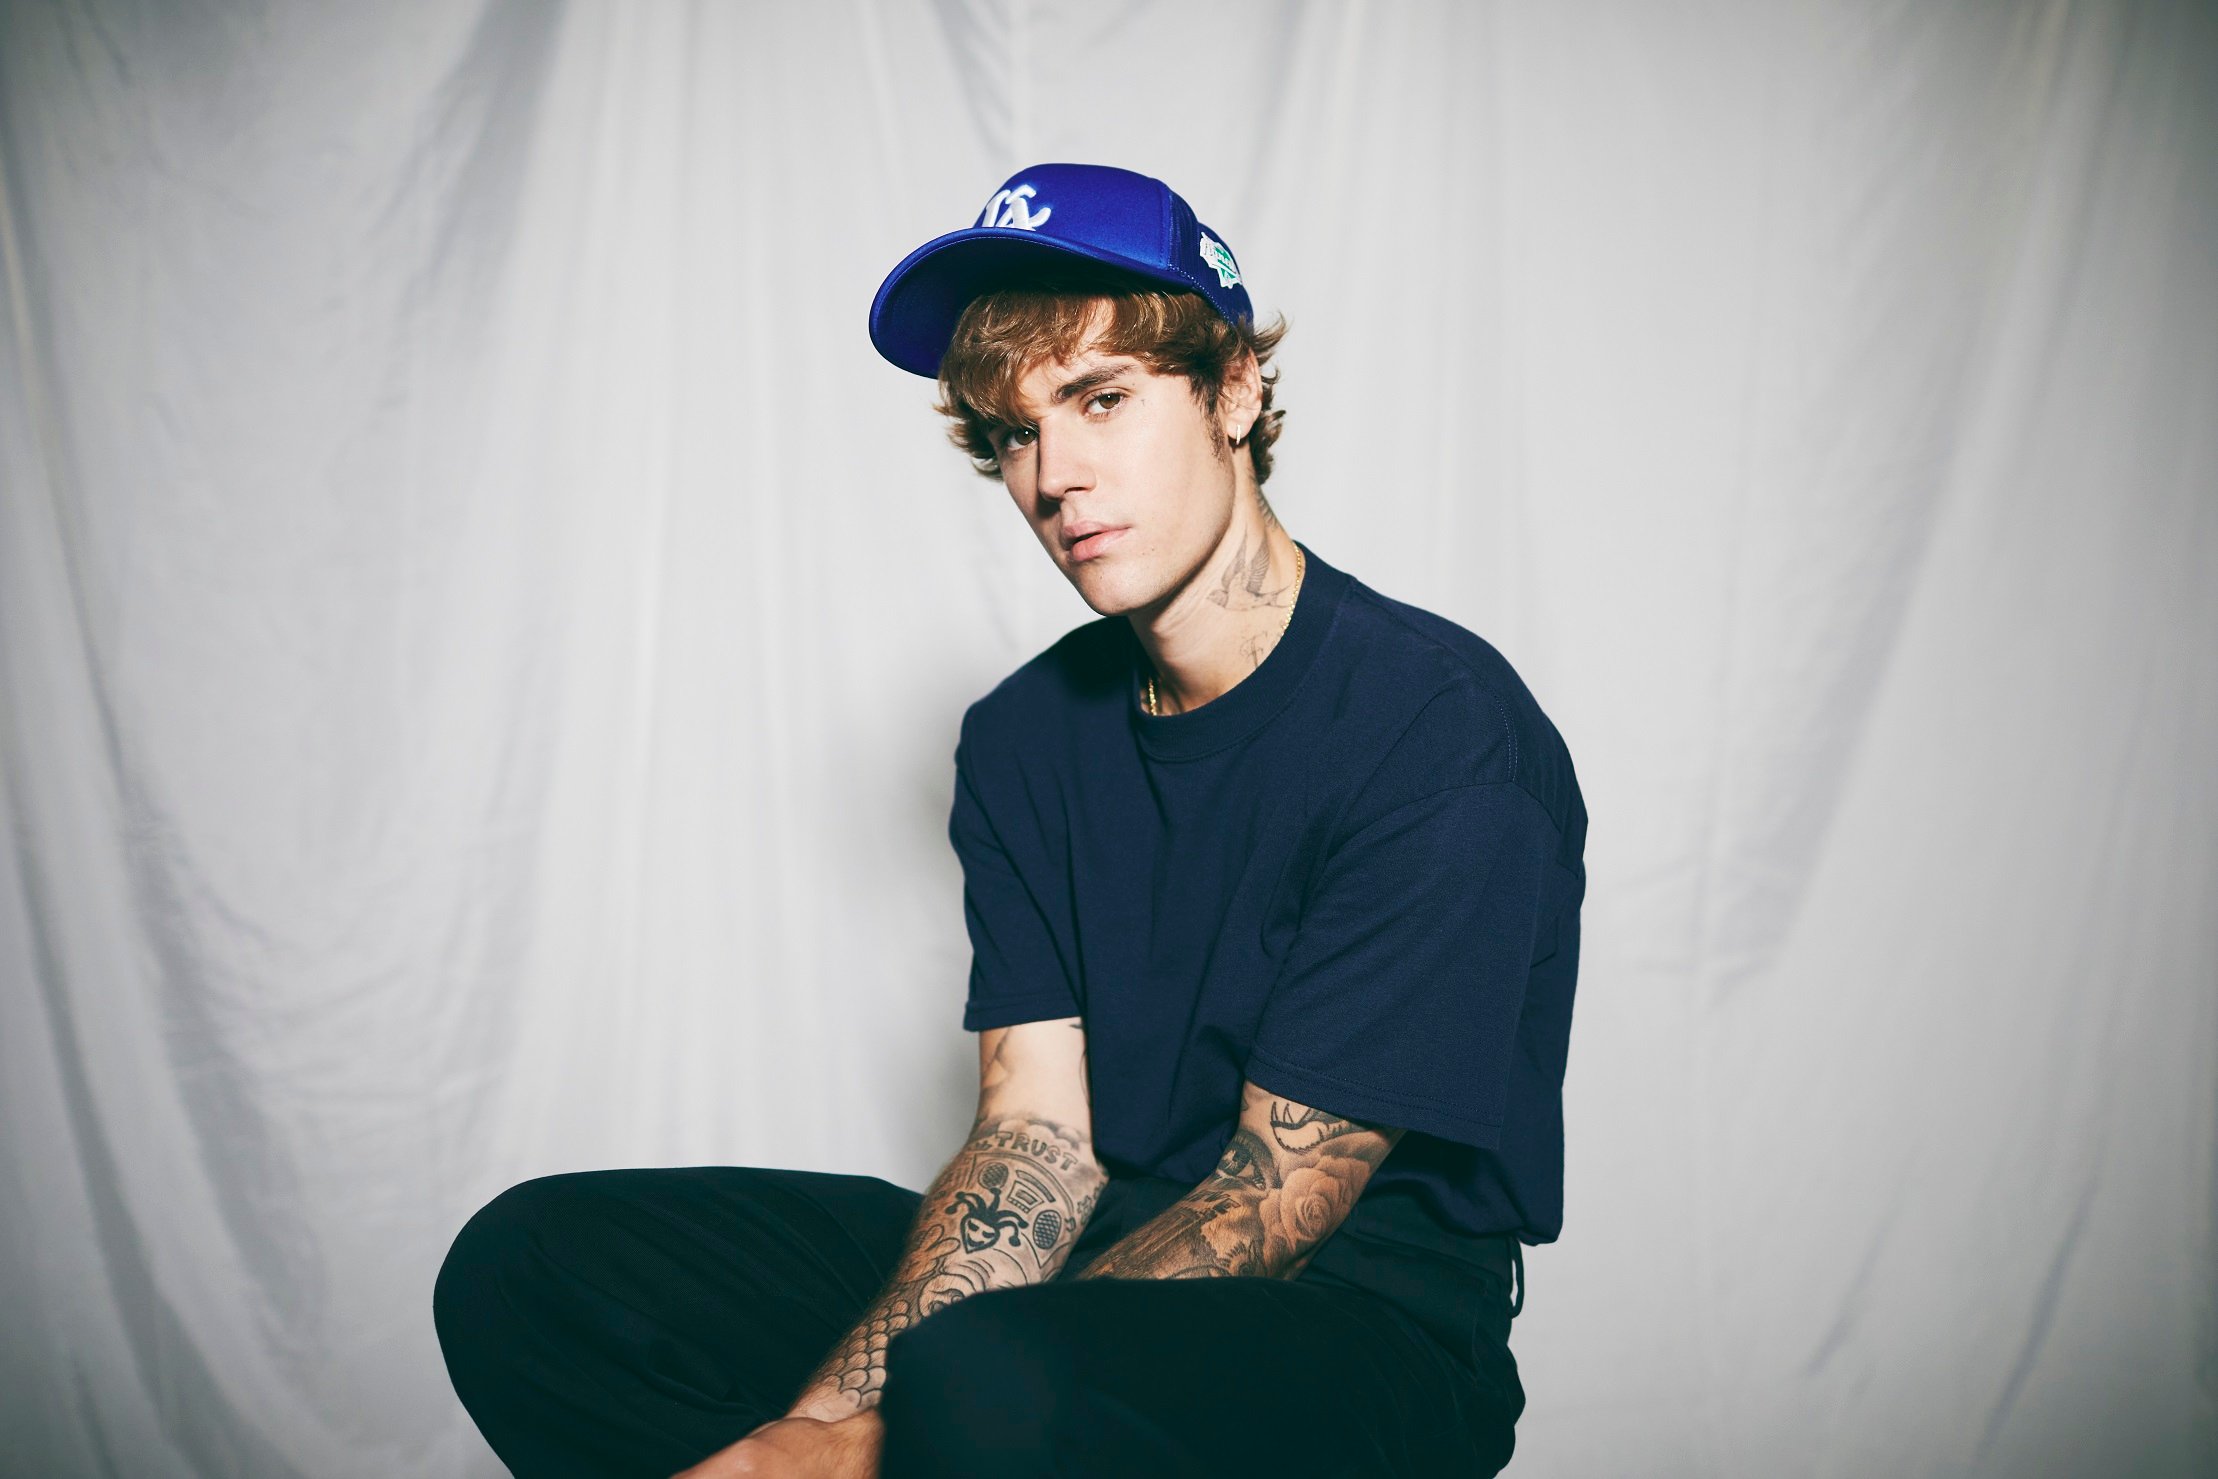 Justin Bieber wearing a hat